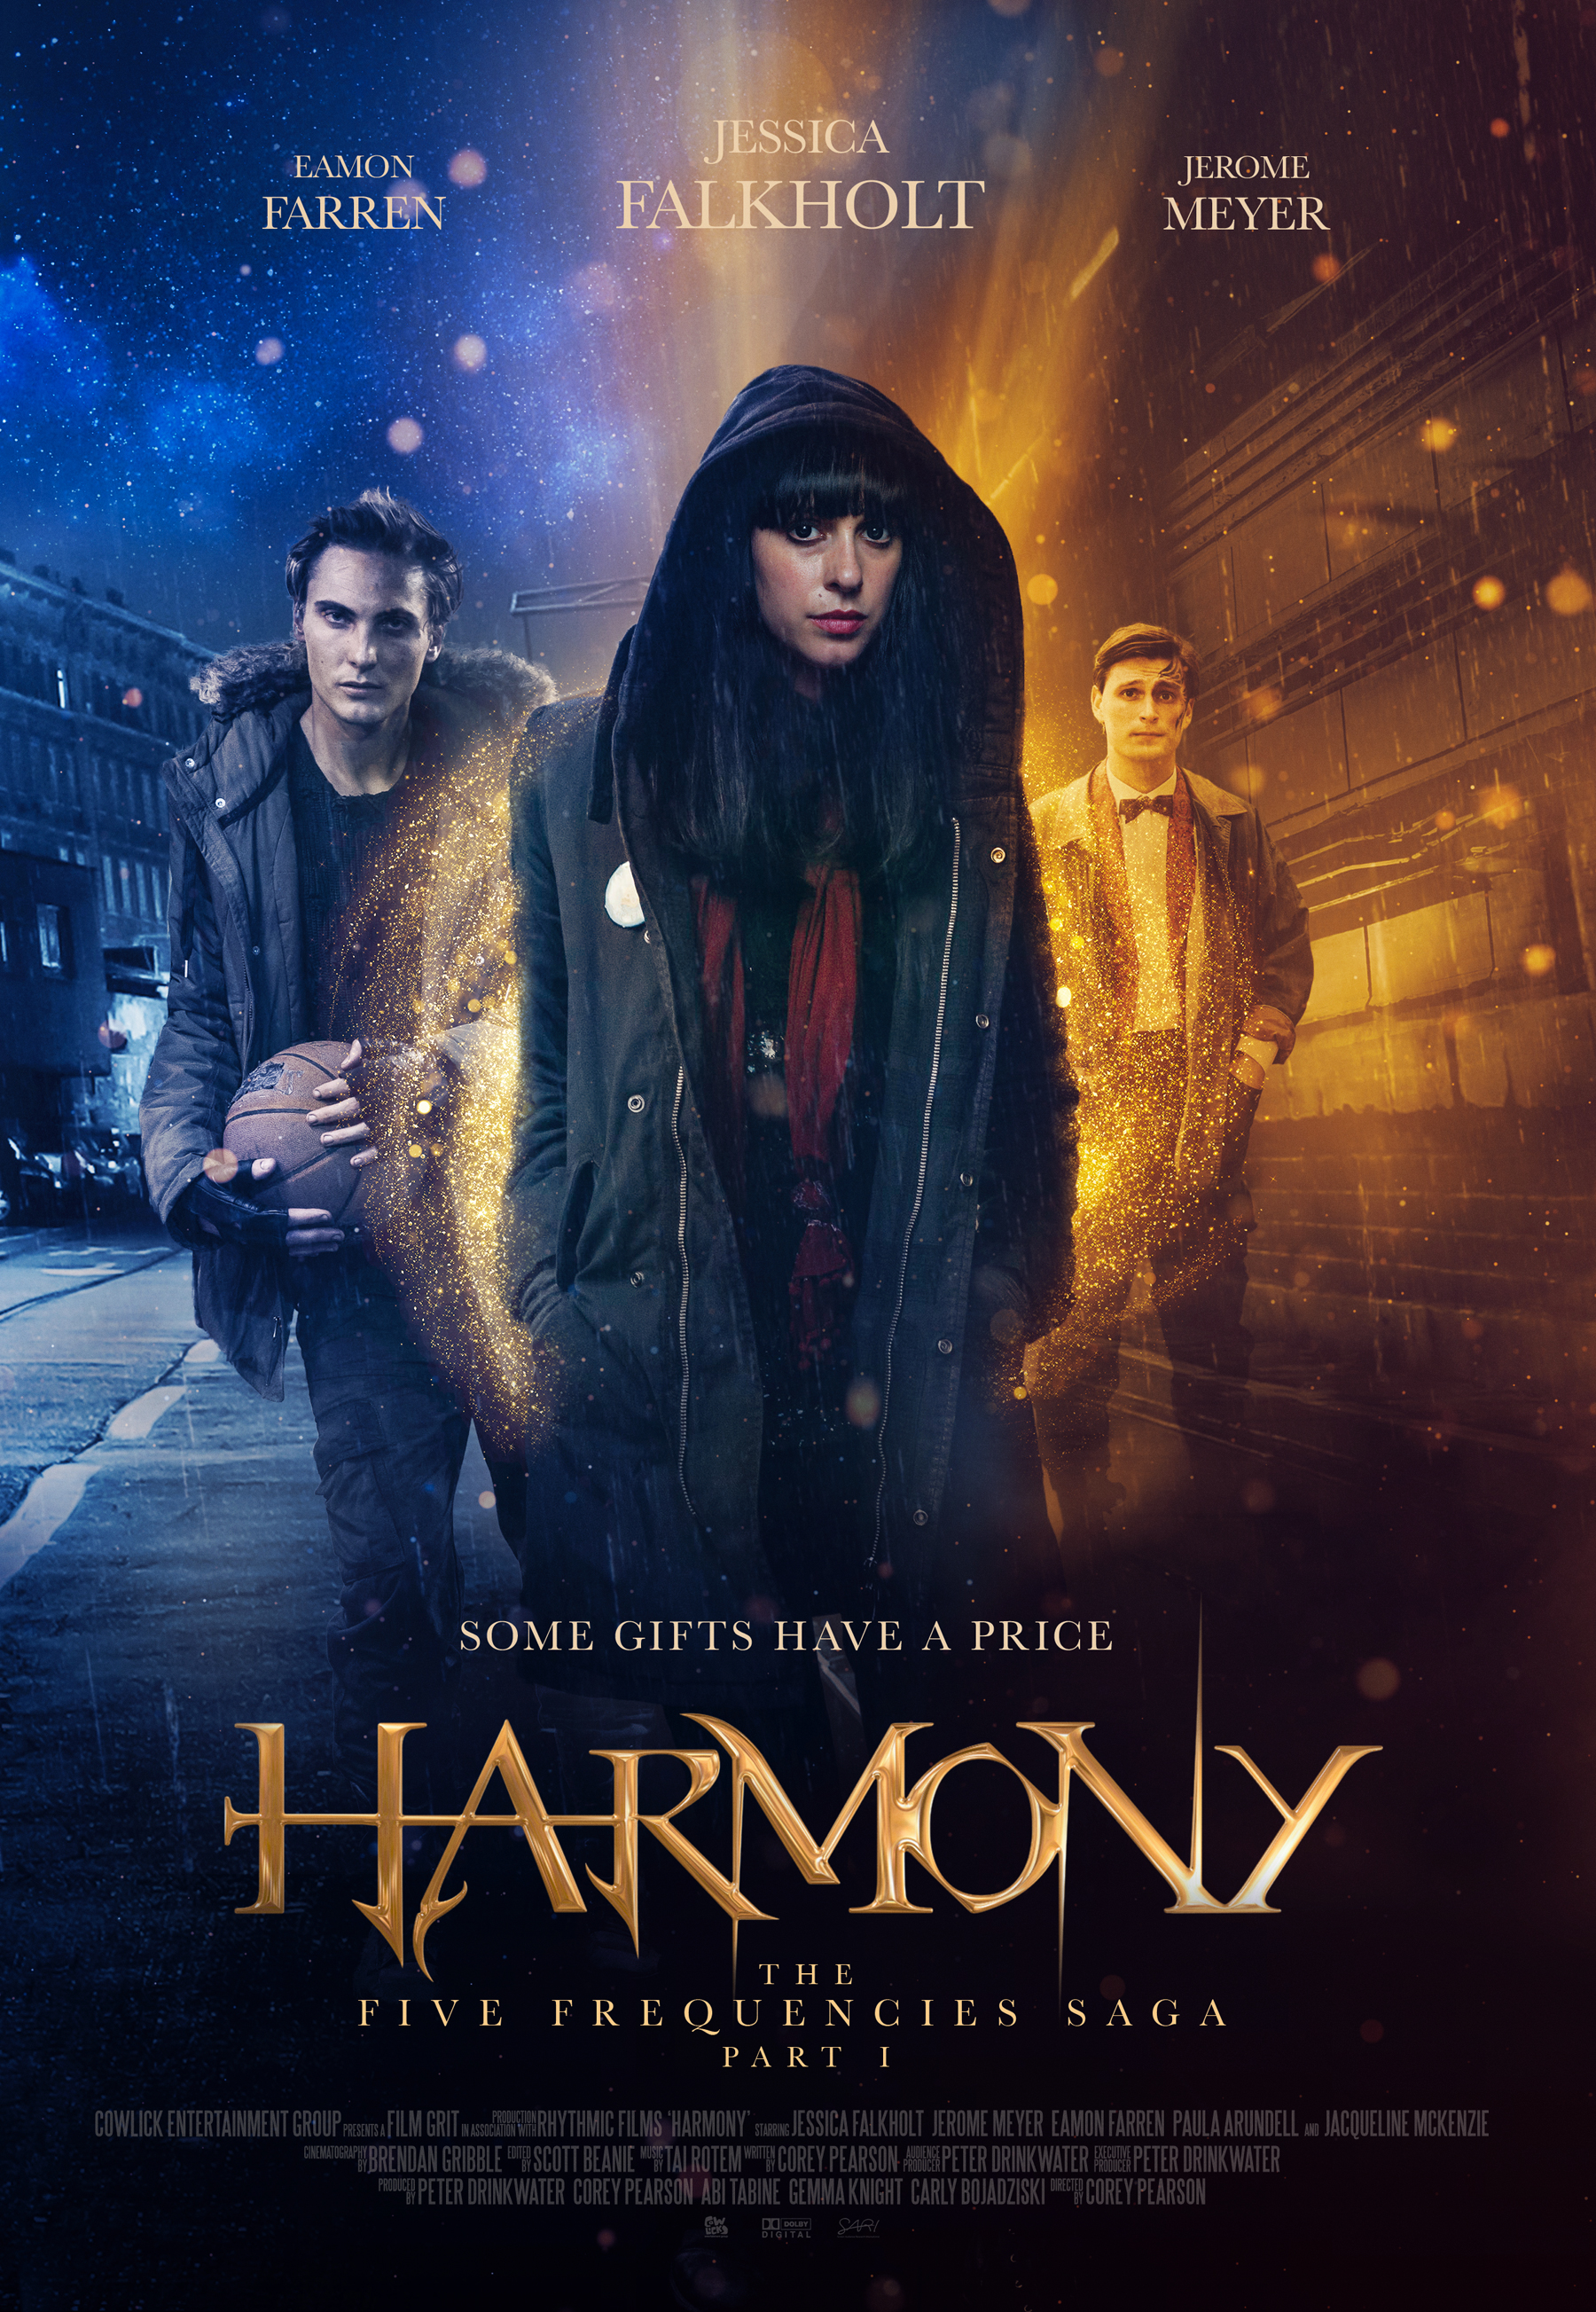 Nonton film Harmony layarkaca21 indoxx1 ganool online streaming terbaru